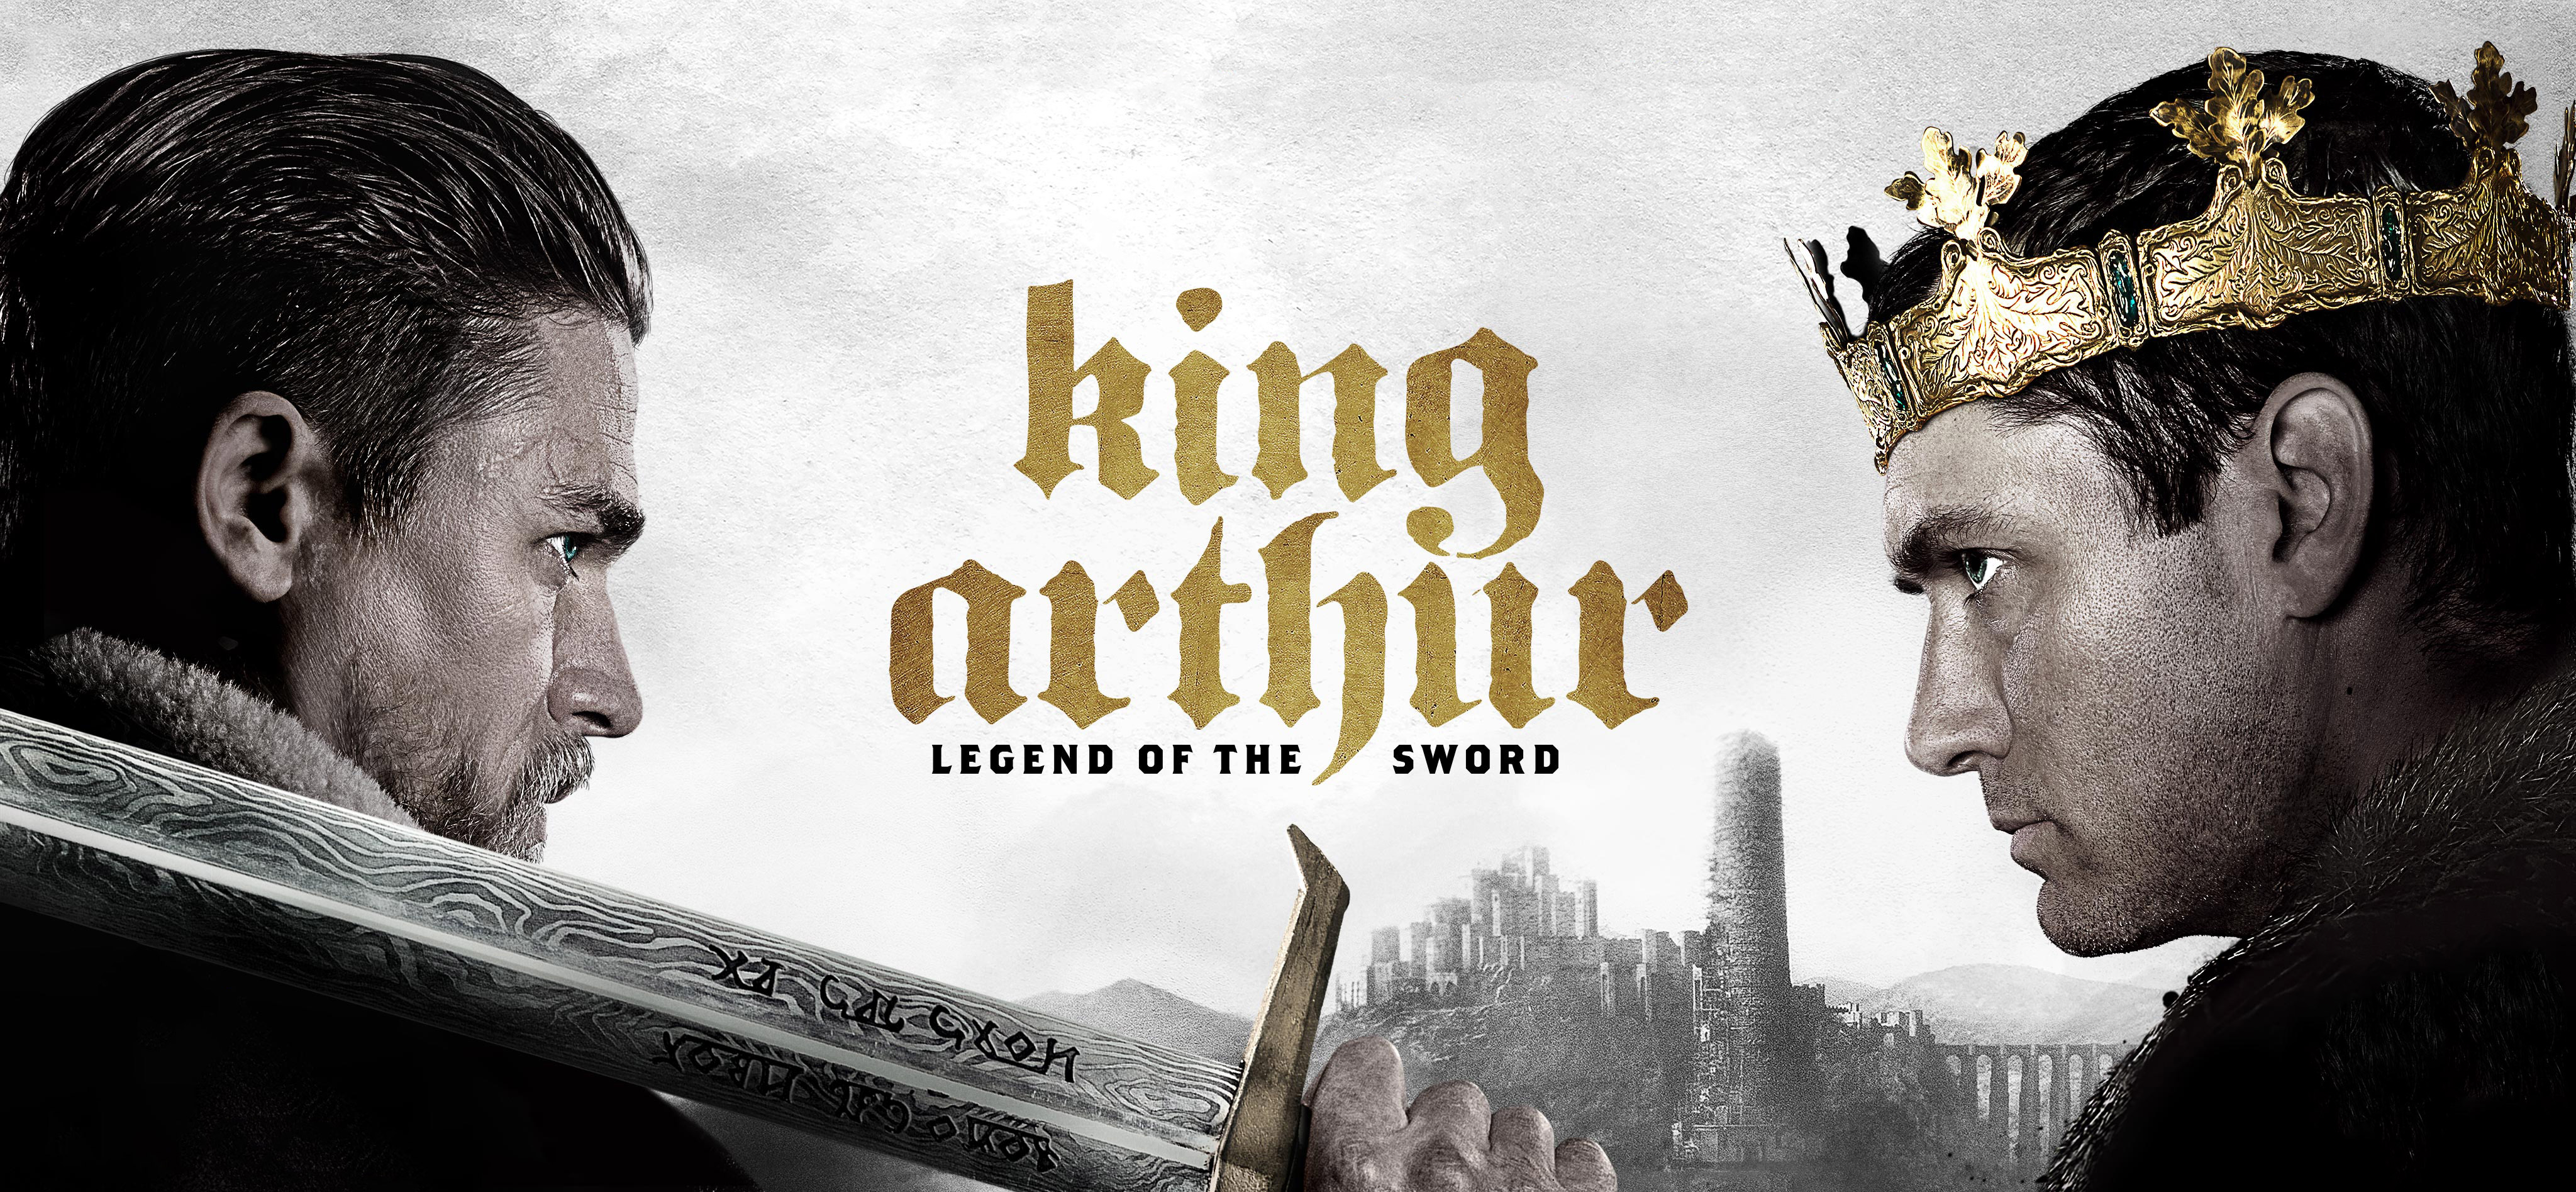 King Arthur Legend of the Sword Image